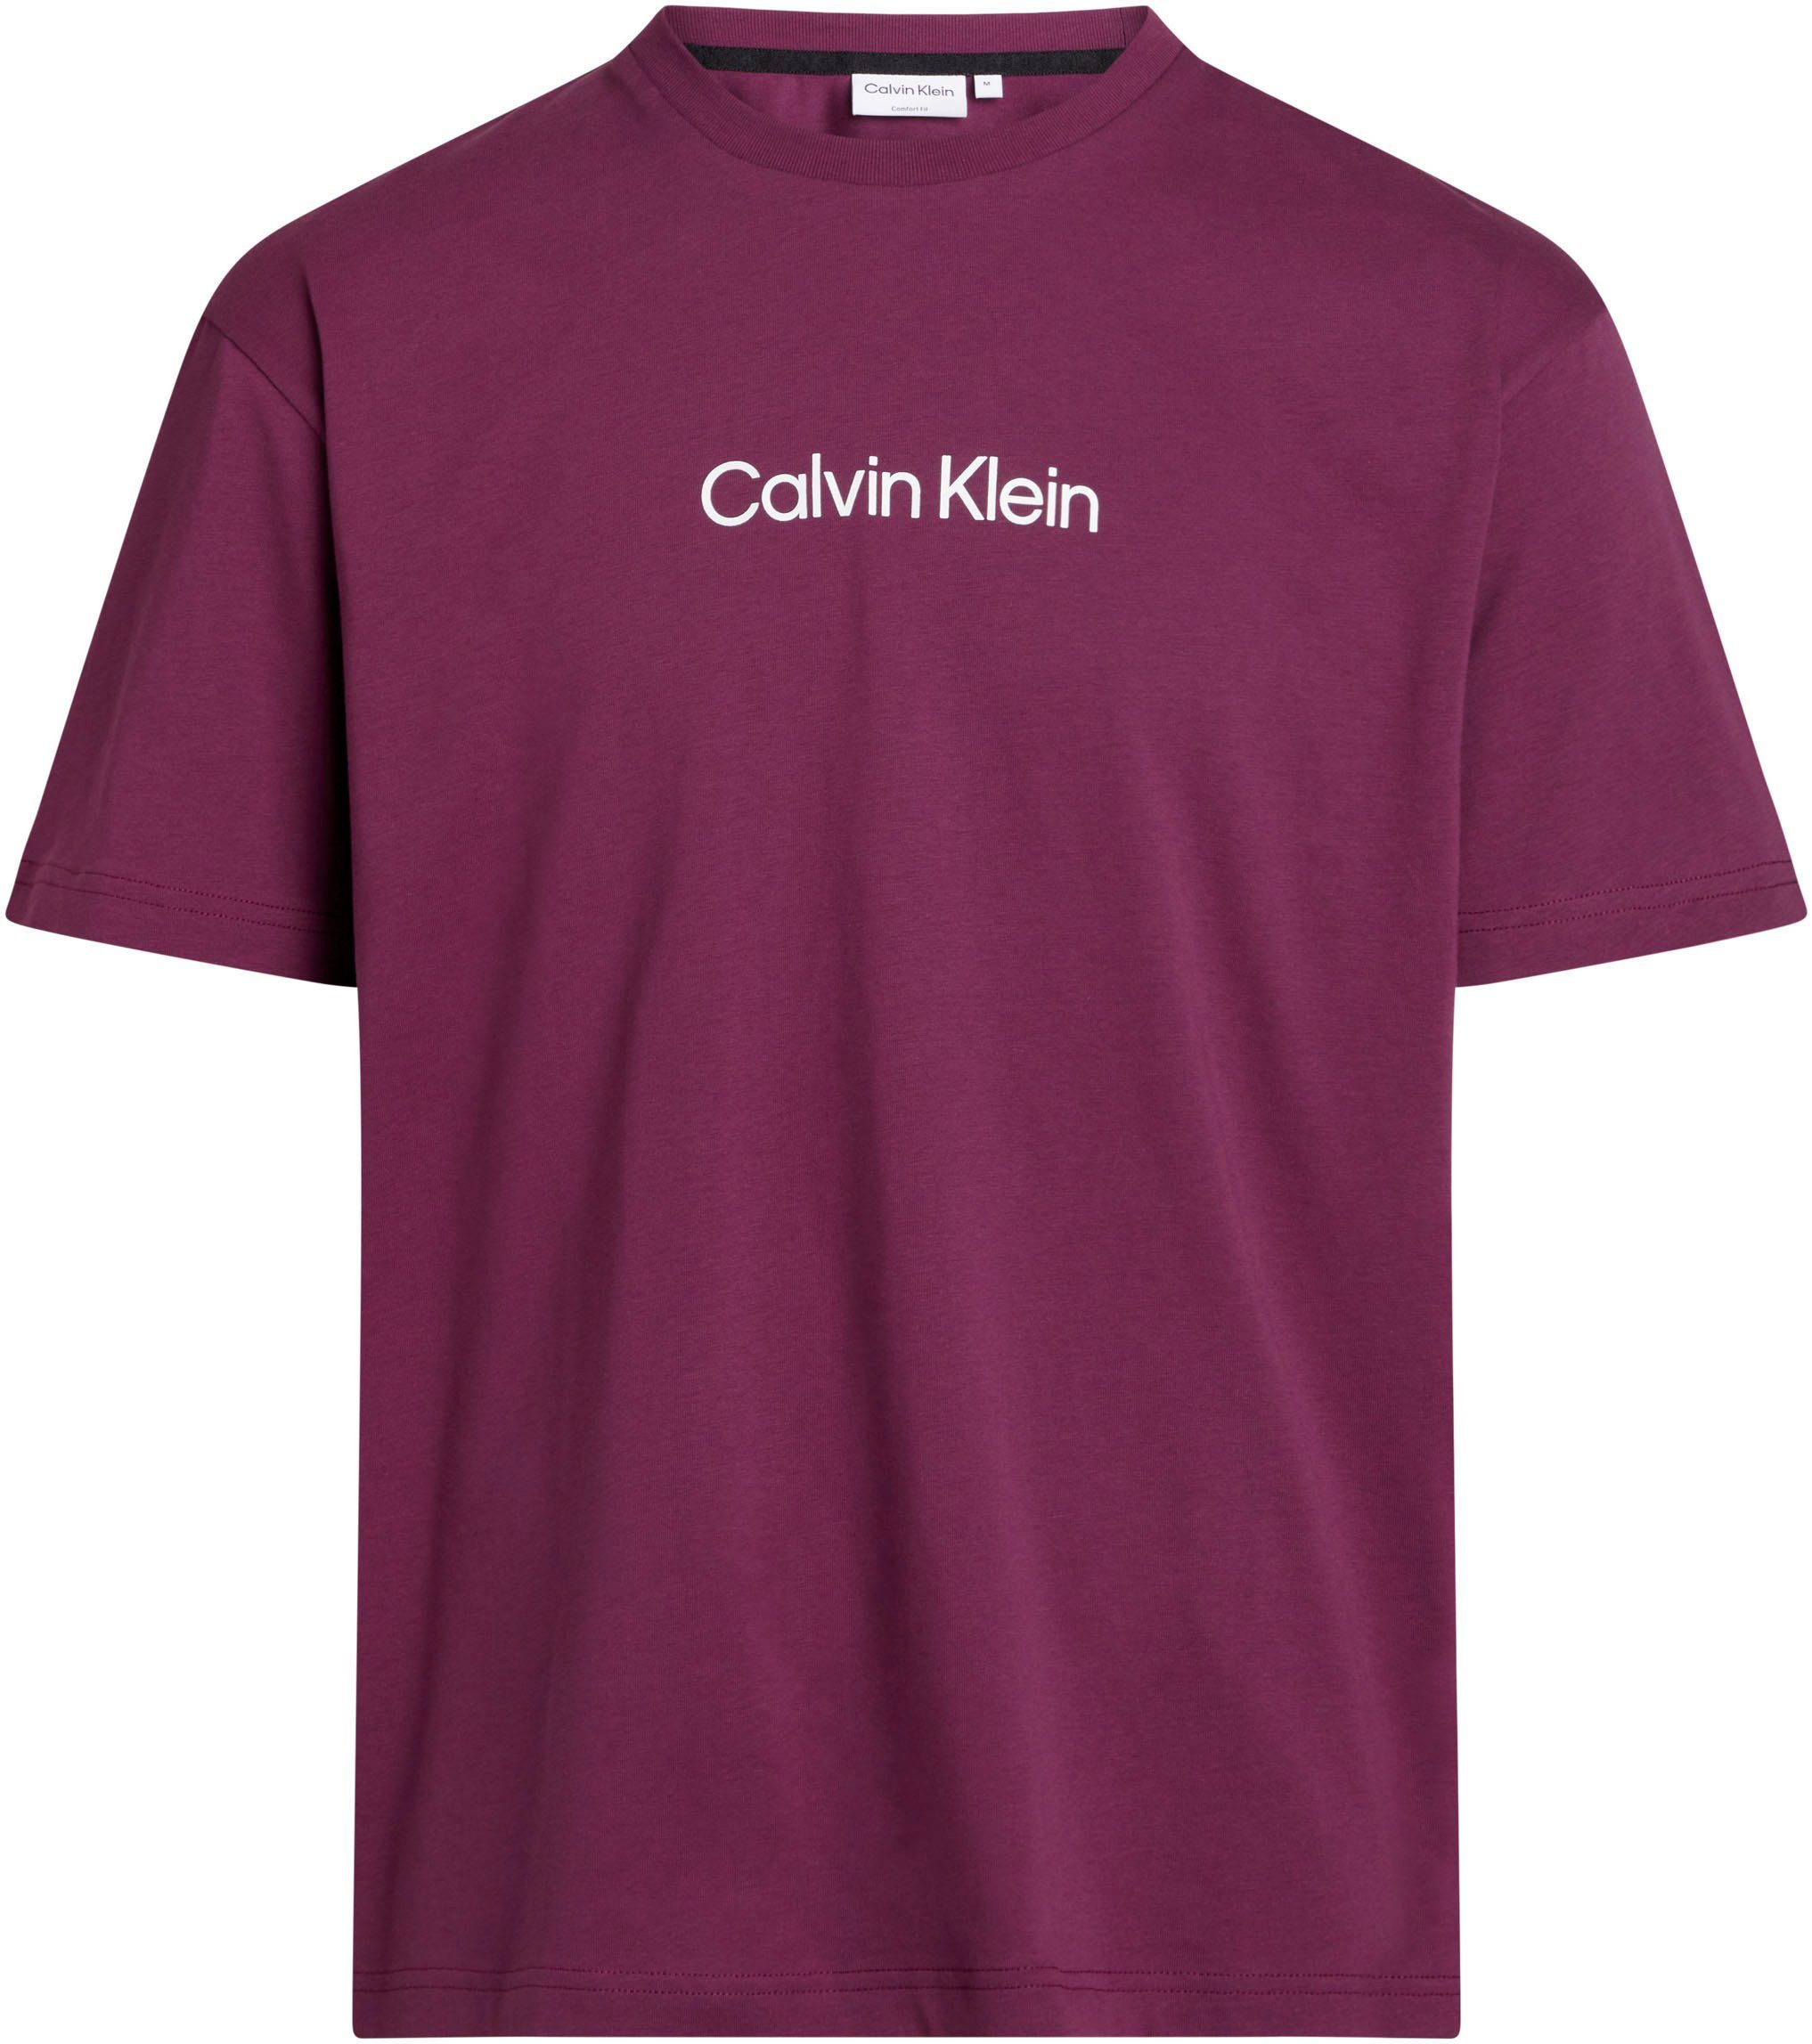 T-Shirt Klein Plum LOGO mit COMFORT T-SHIRT HERO Markenlabel aufgedrucktem Calvin Italian